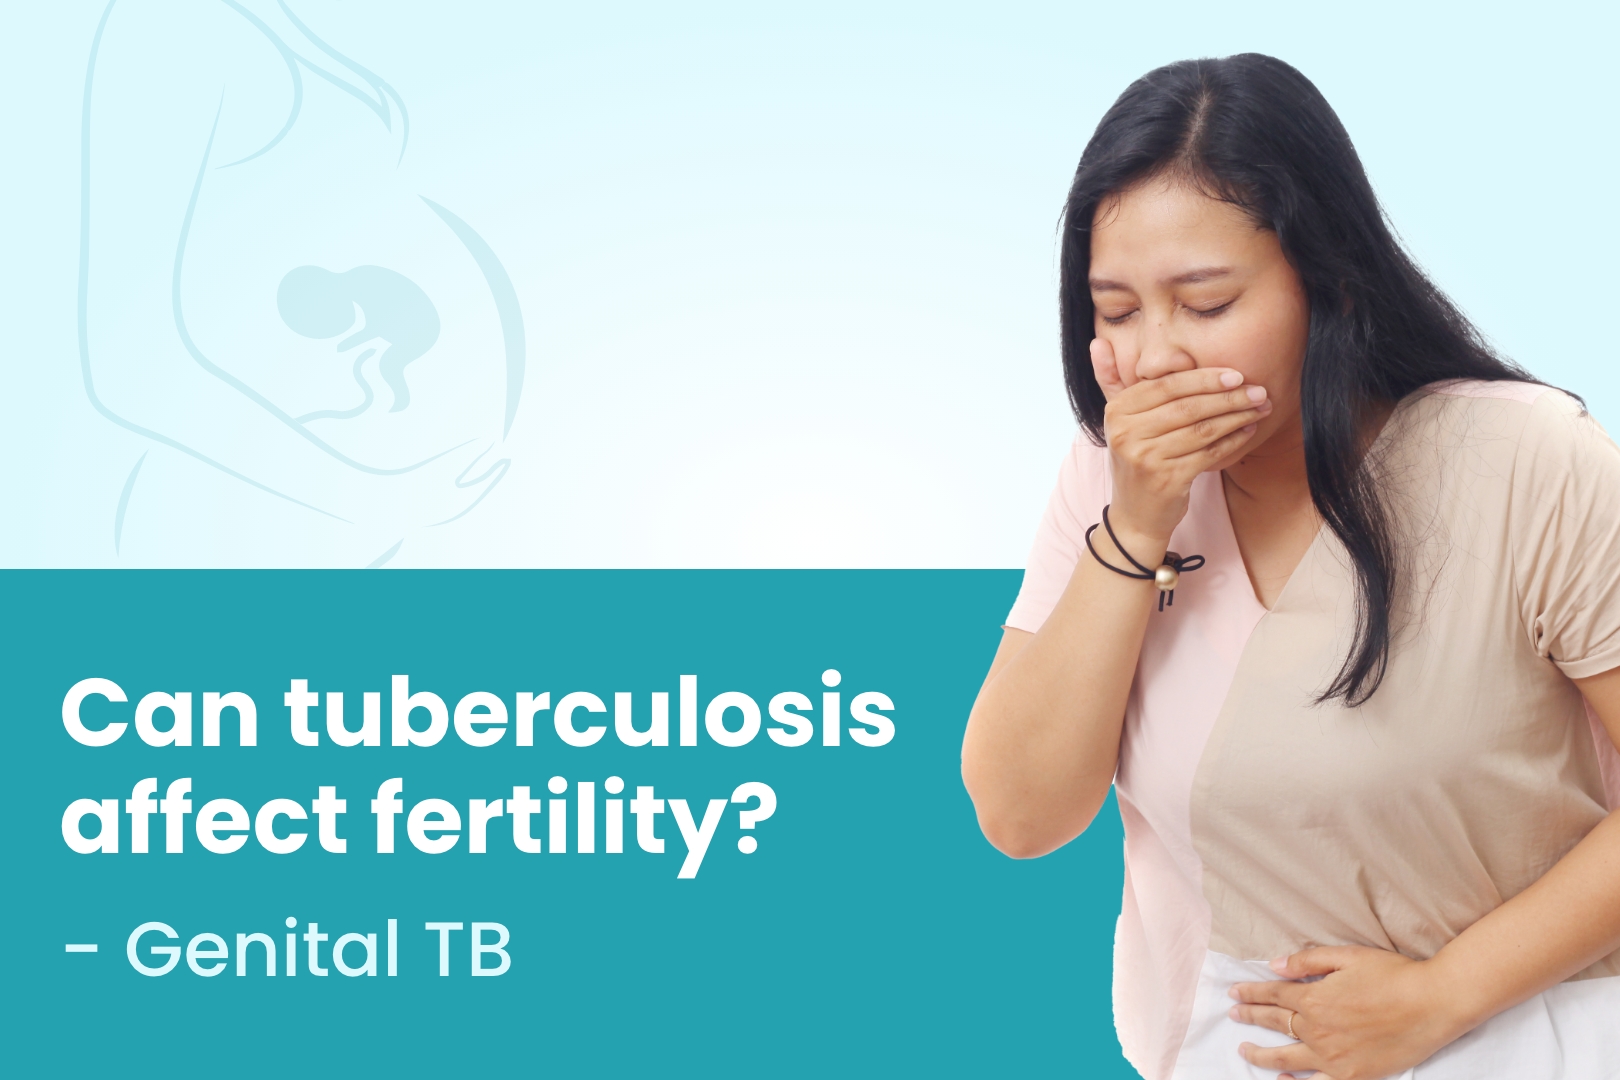 Can tuberculosis affect female fertility? - Genital TB